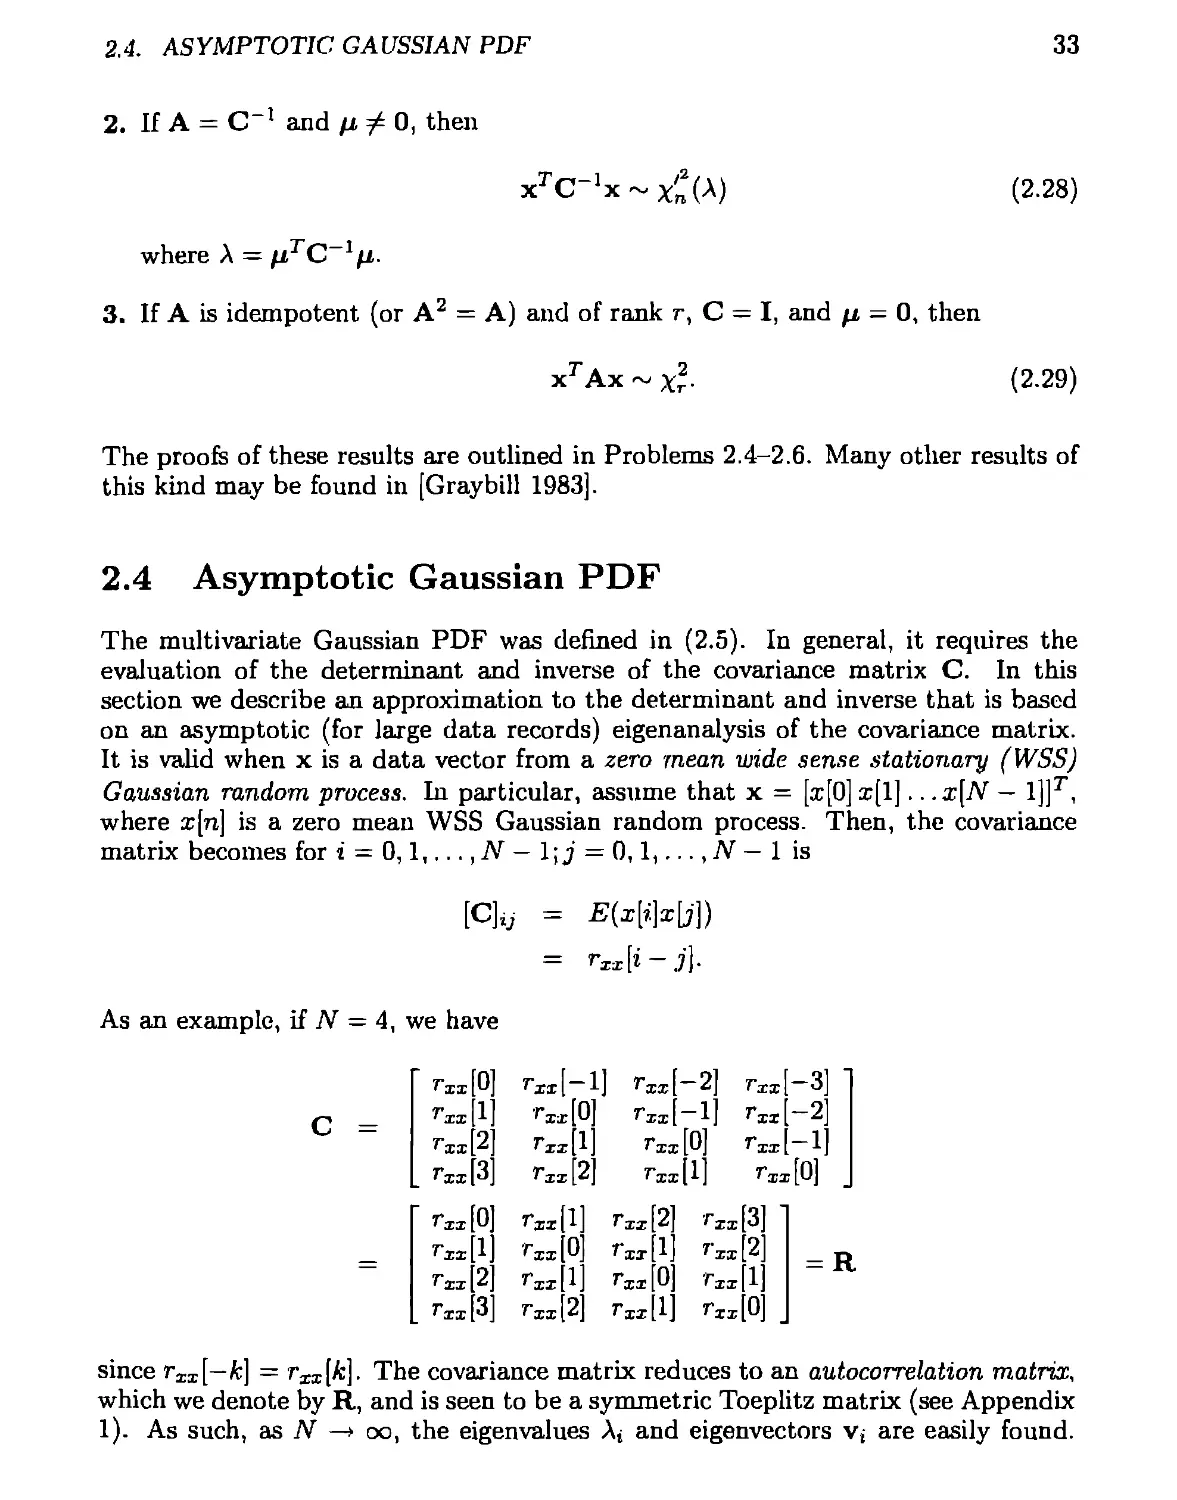 2.4 Asymptotic Gaussian PDF